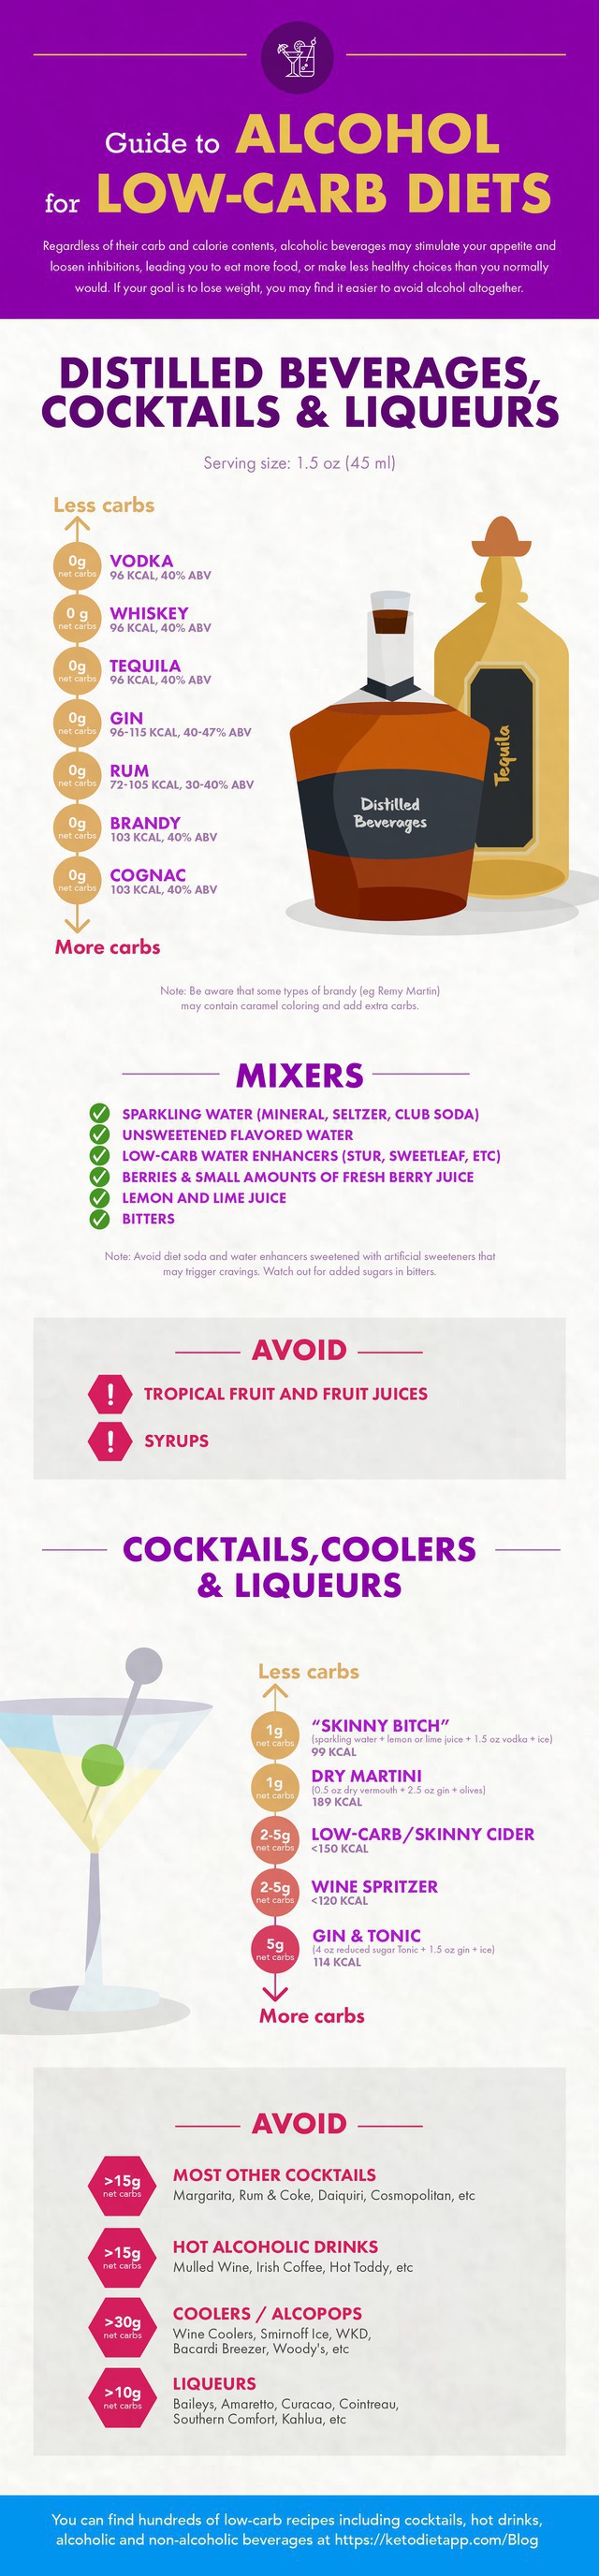 Alcohol Guide - Distilled Beverages, Cocktails and Liqueurs